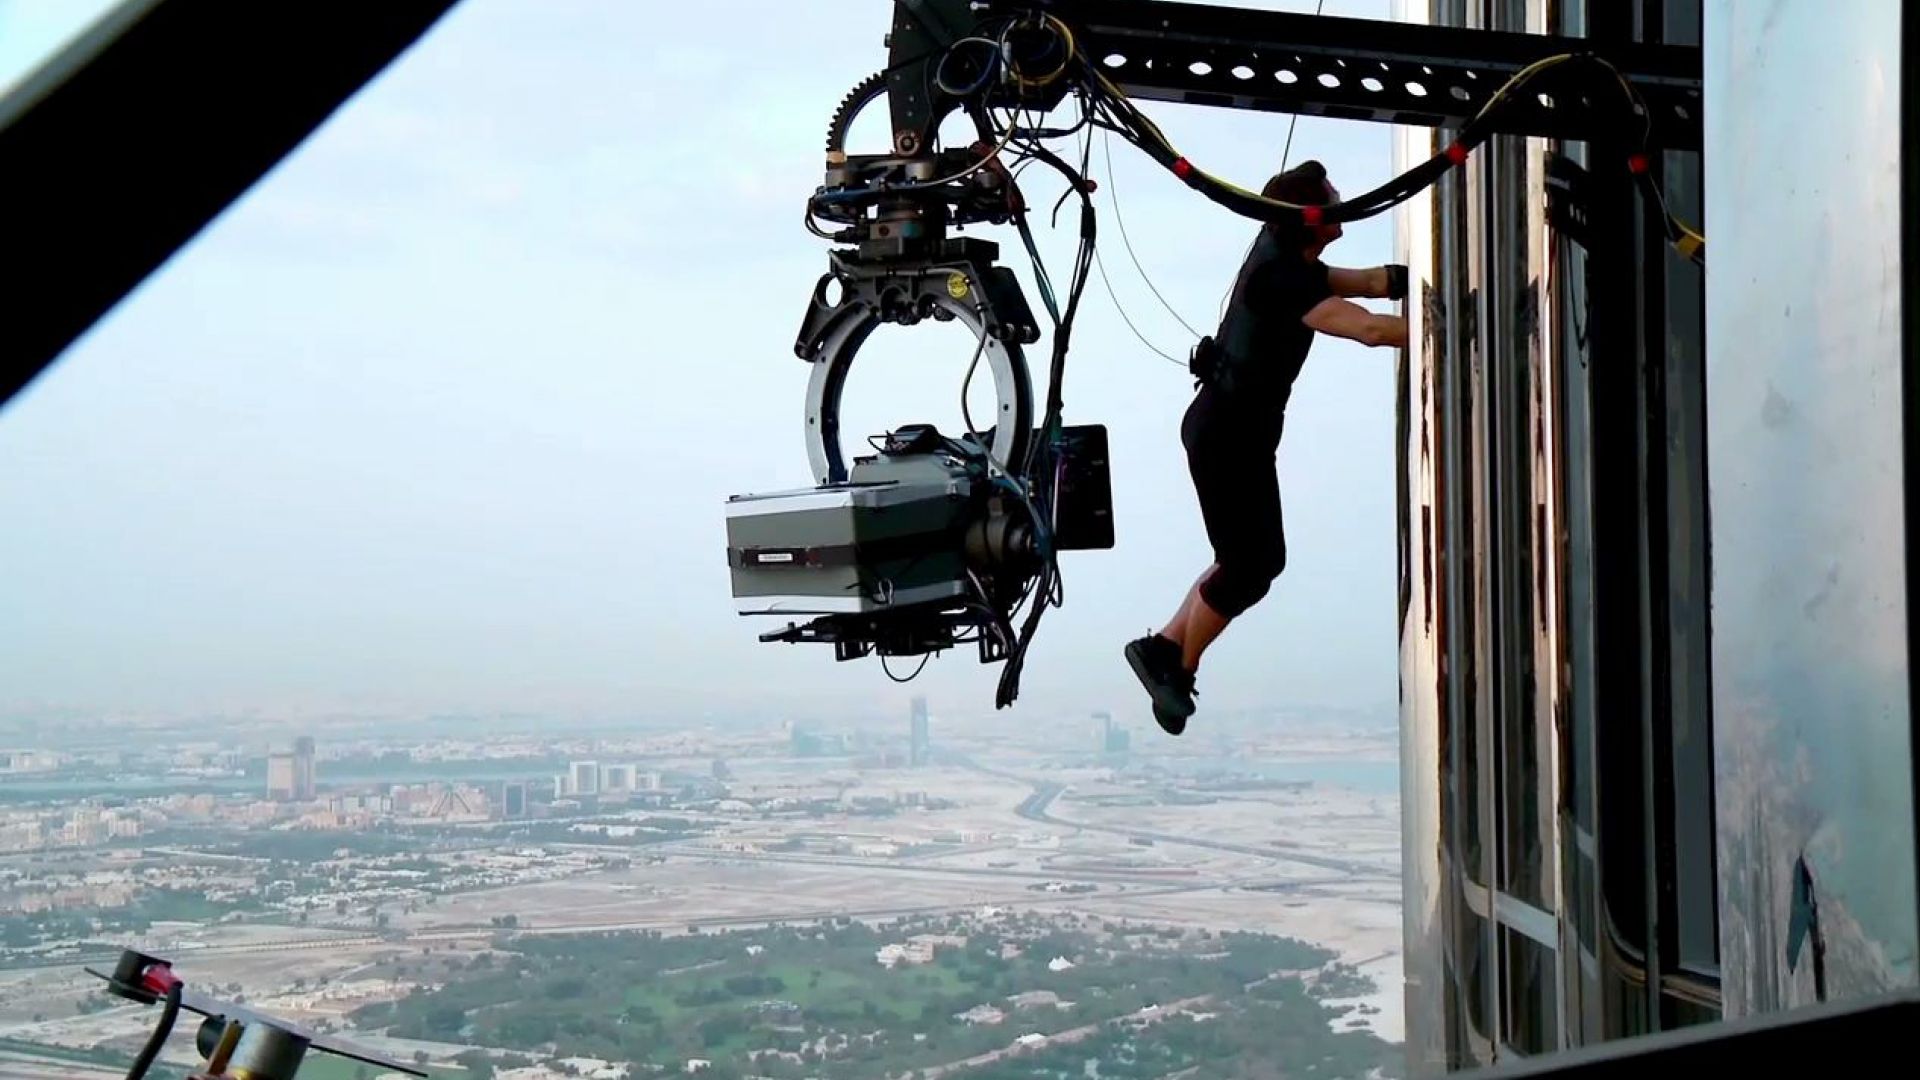 Tom Cruise does his own stunts and climbs the Burj Khalifa